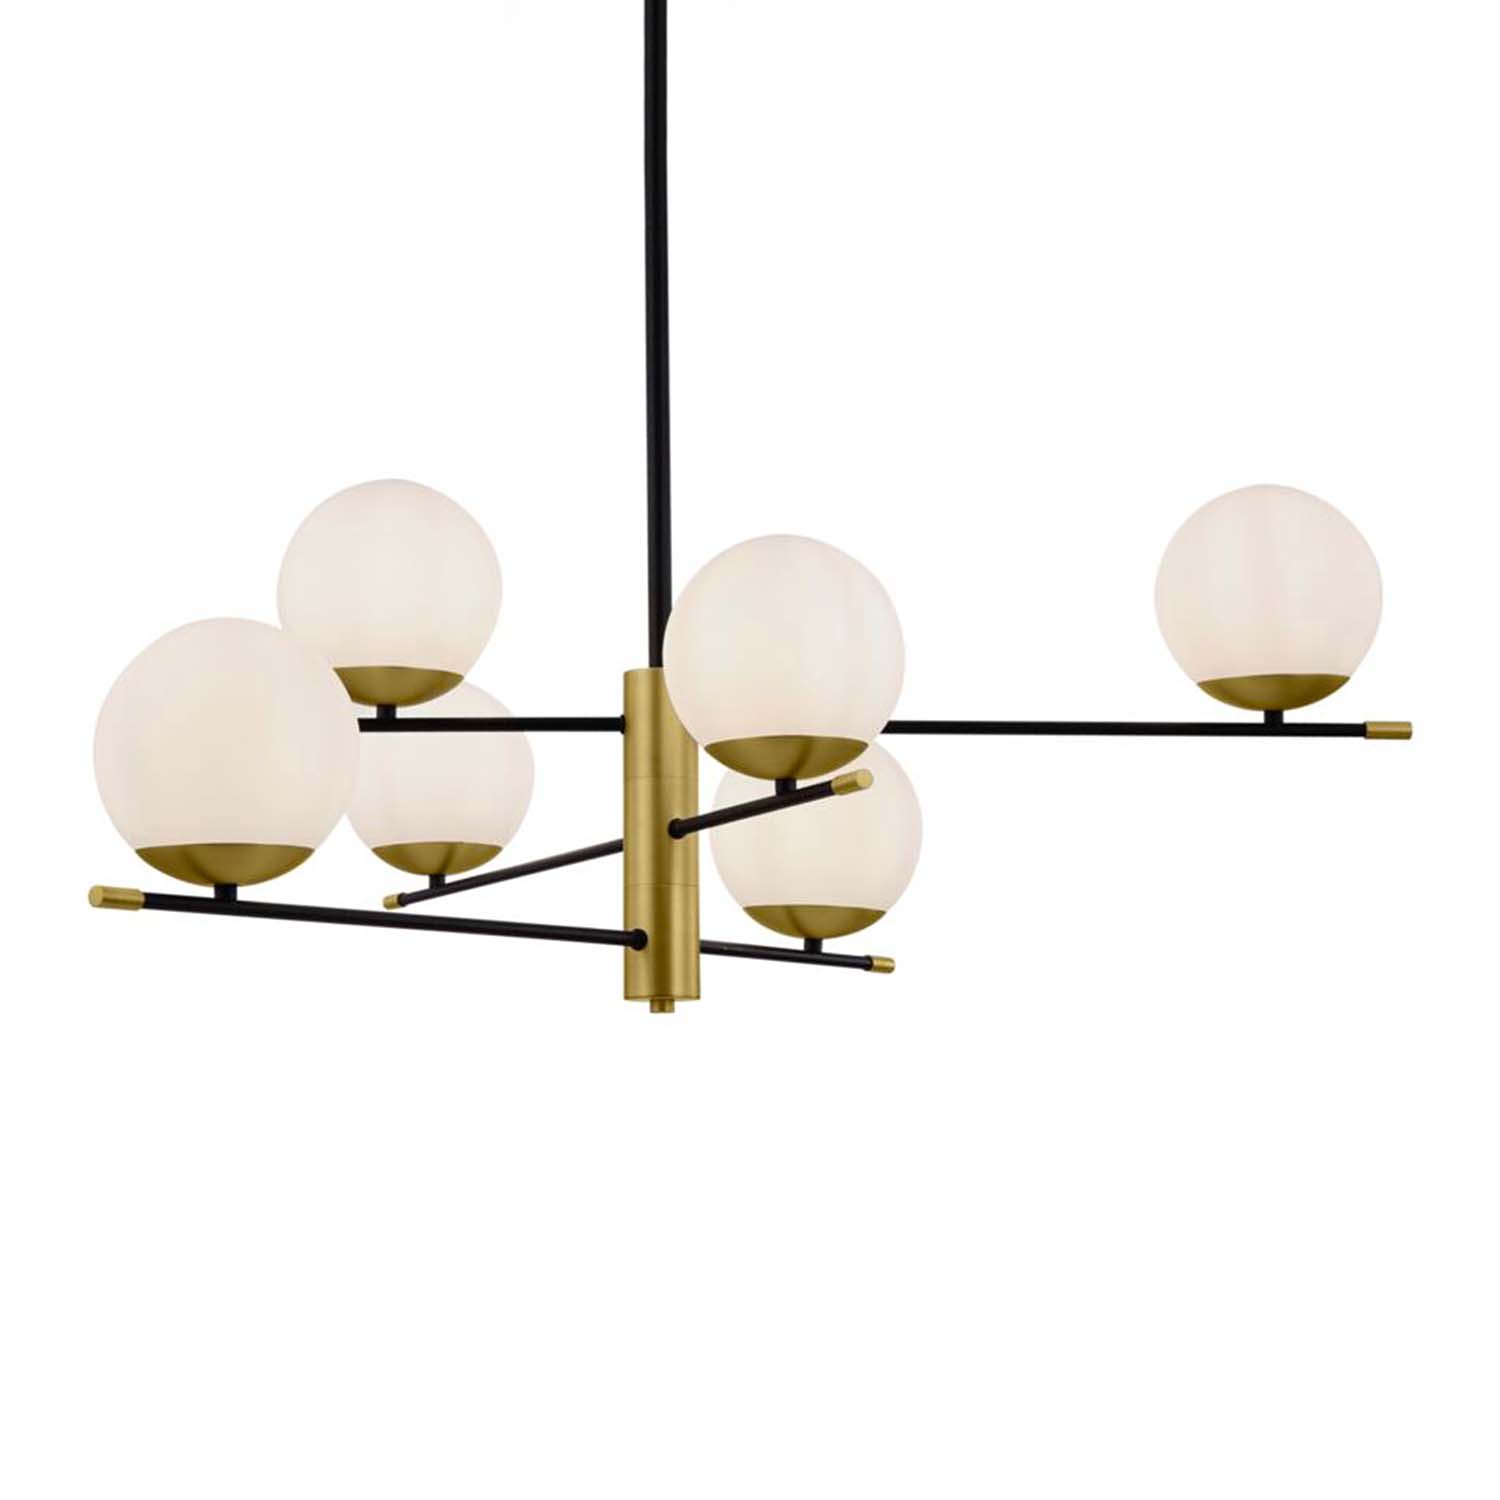 NOSTALGIA - Art Deco pendant lamp with glass balls, gold and black